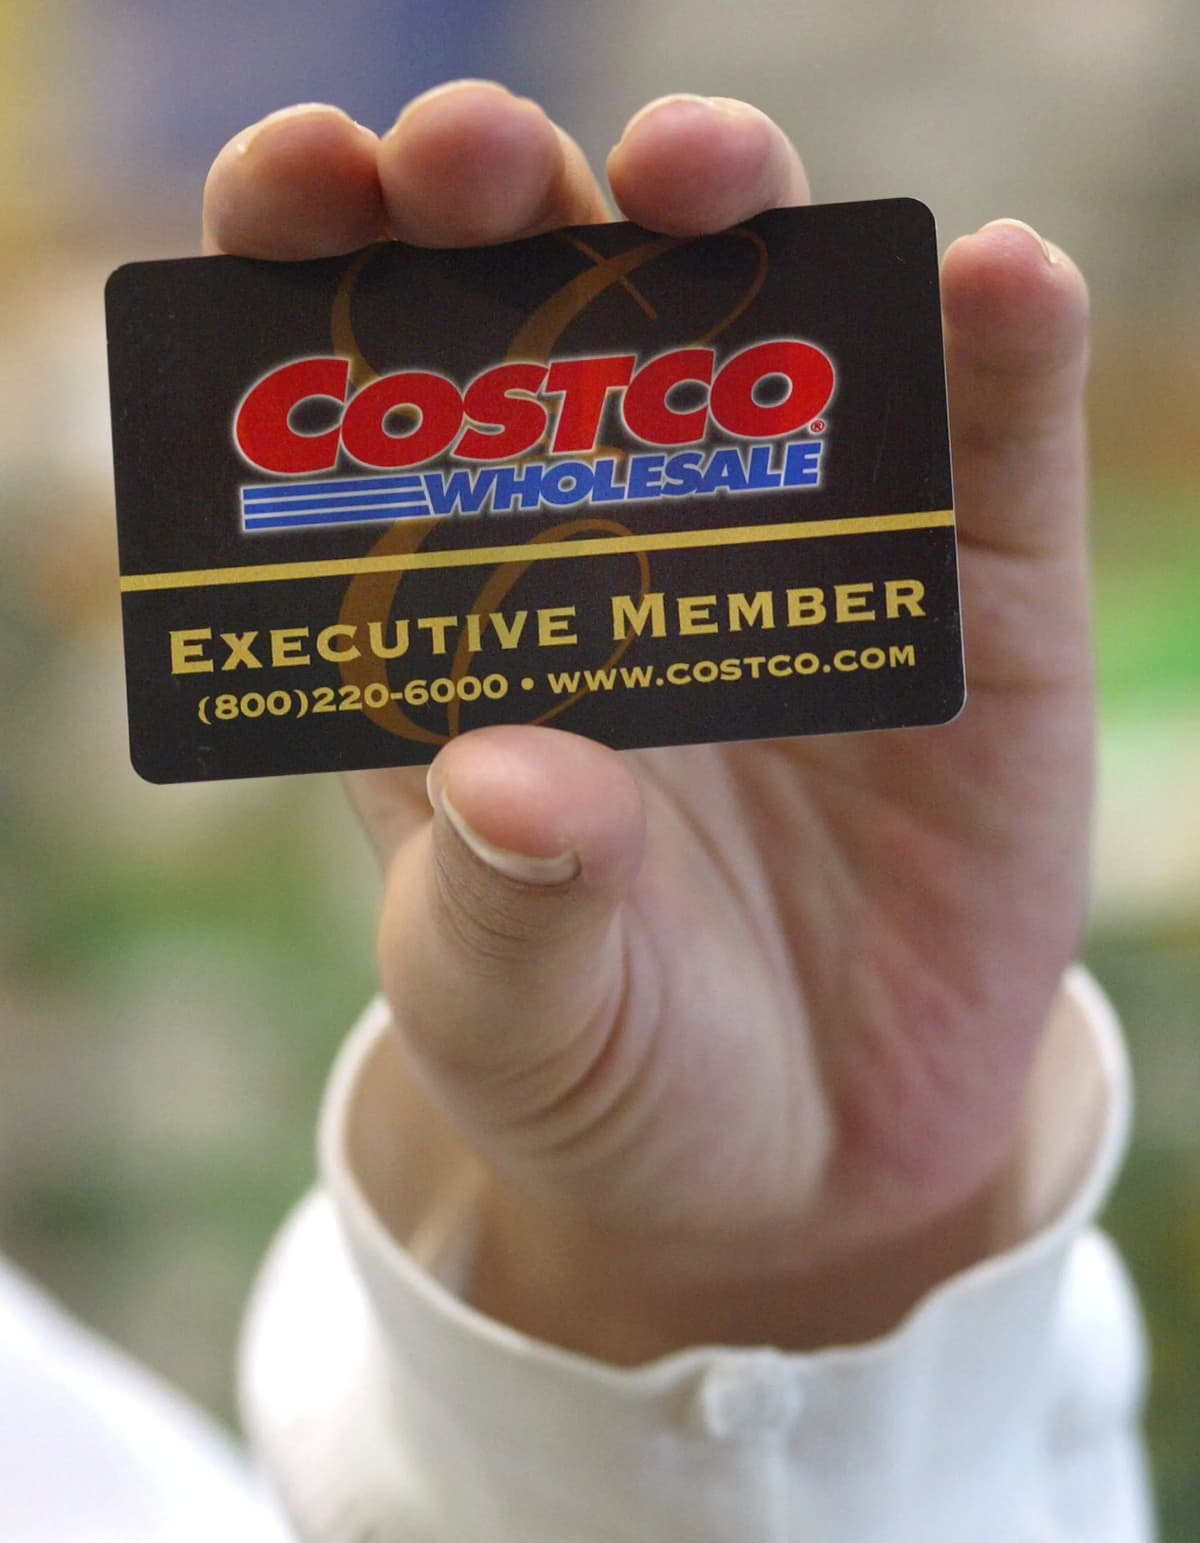 Hand holding a Costco membership card